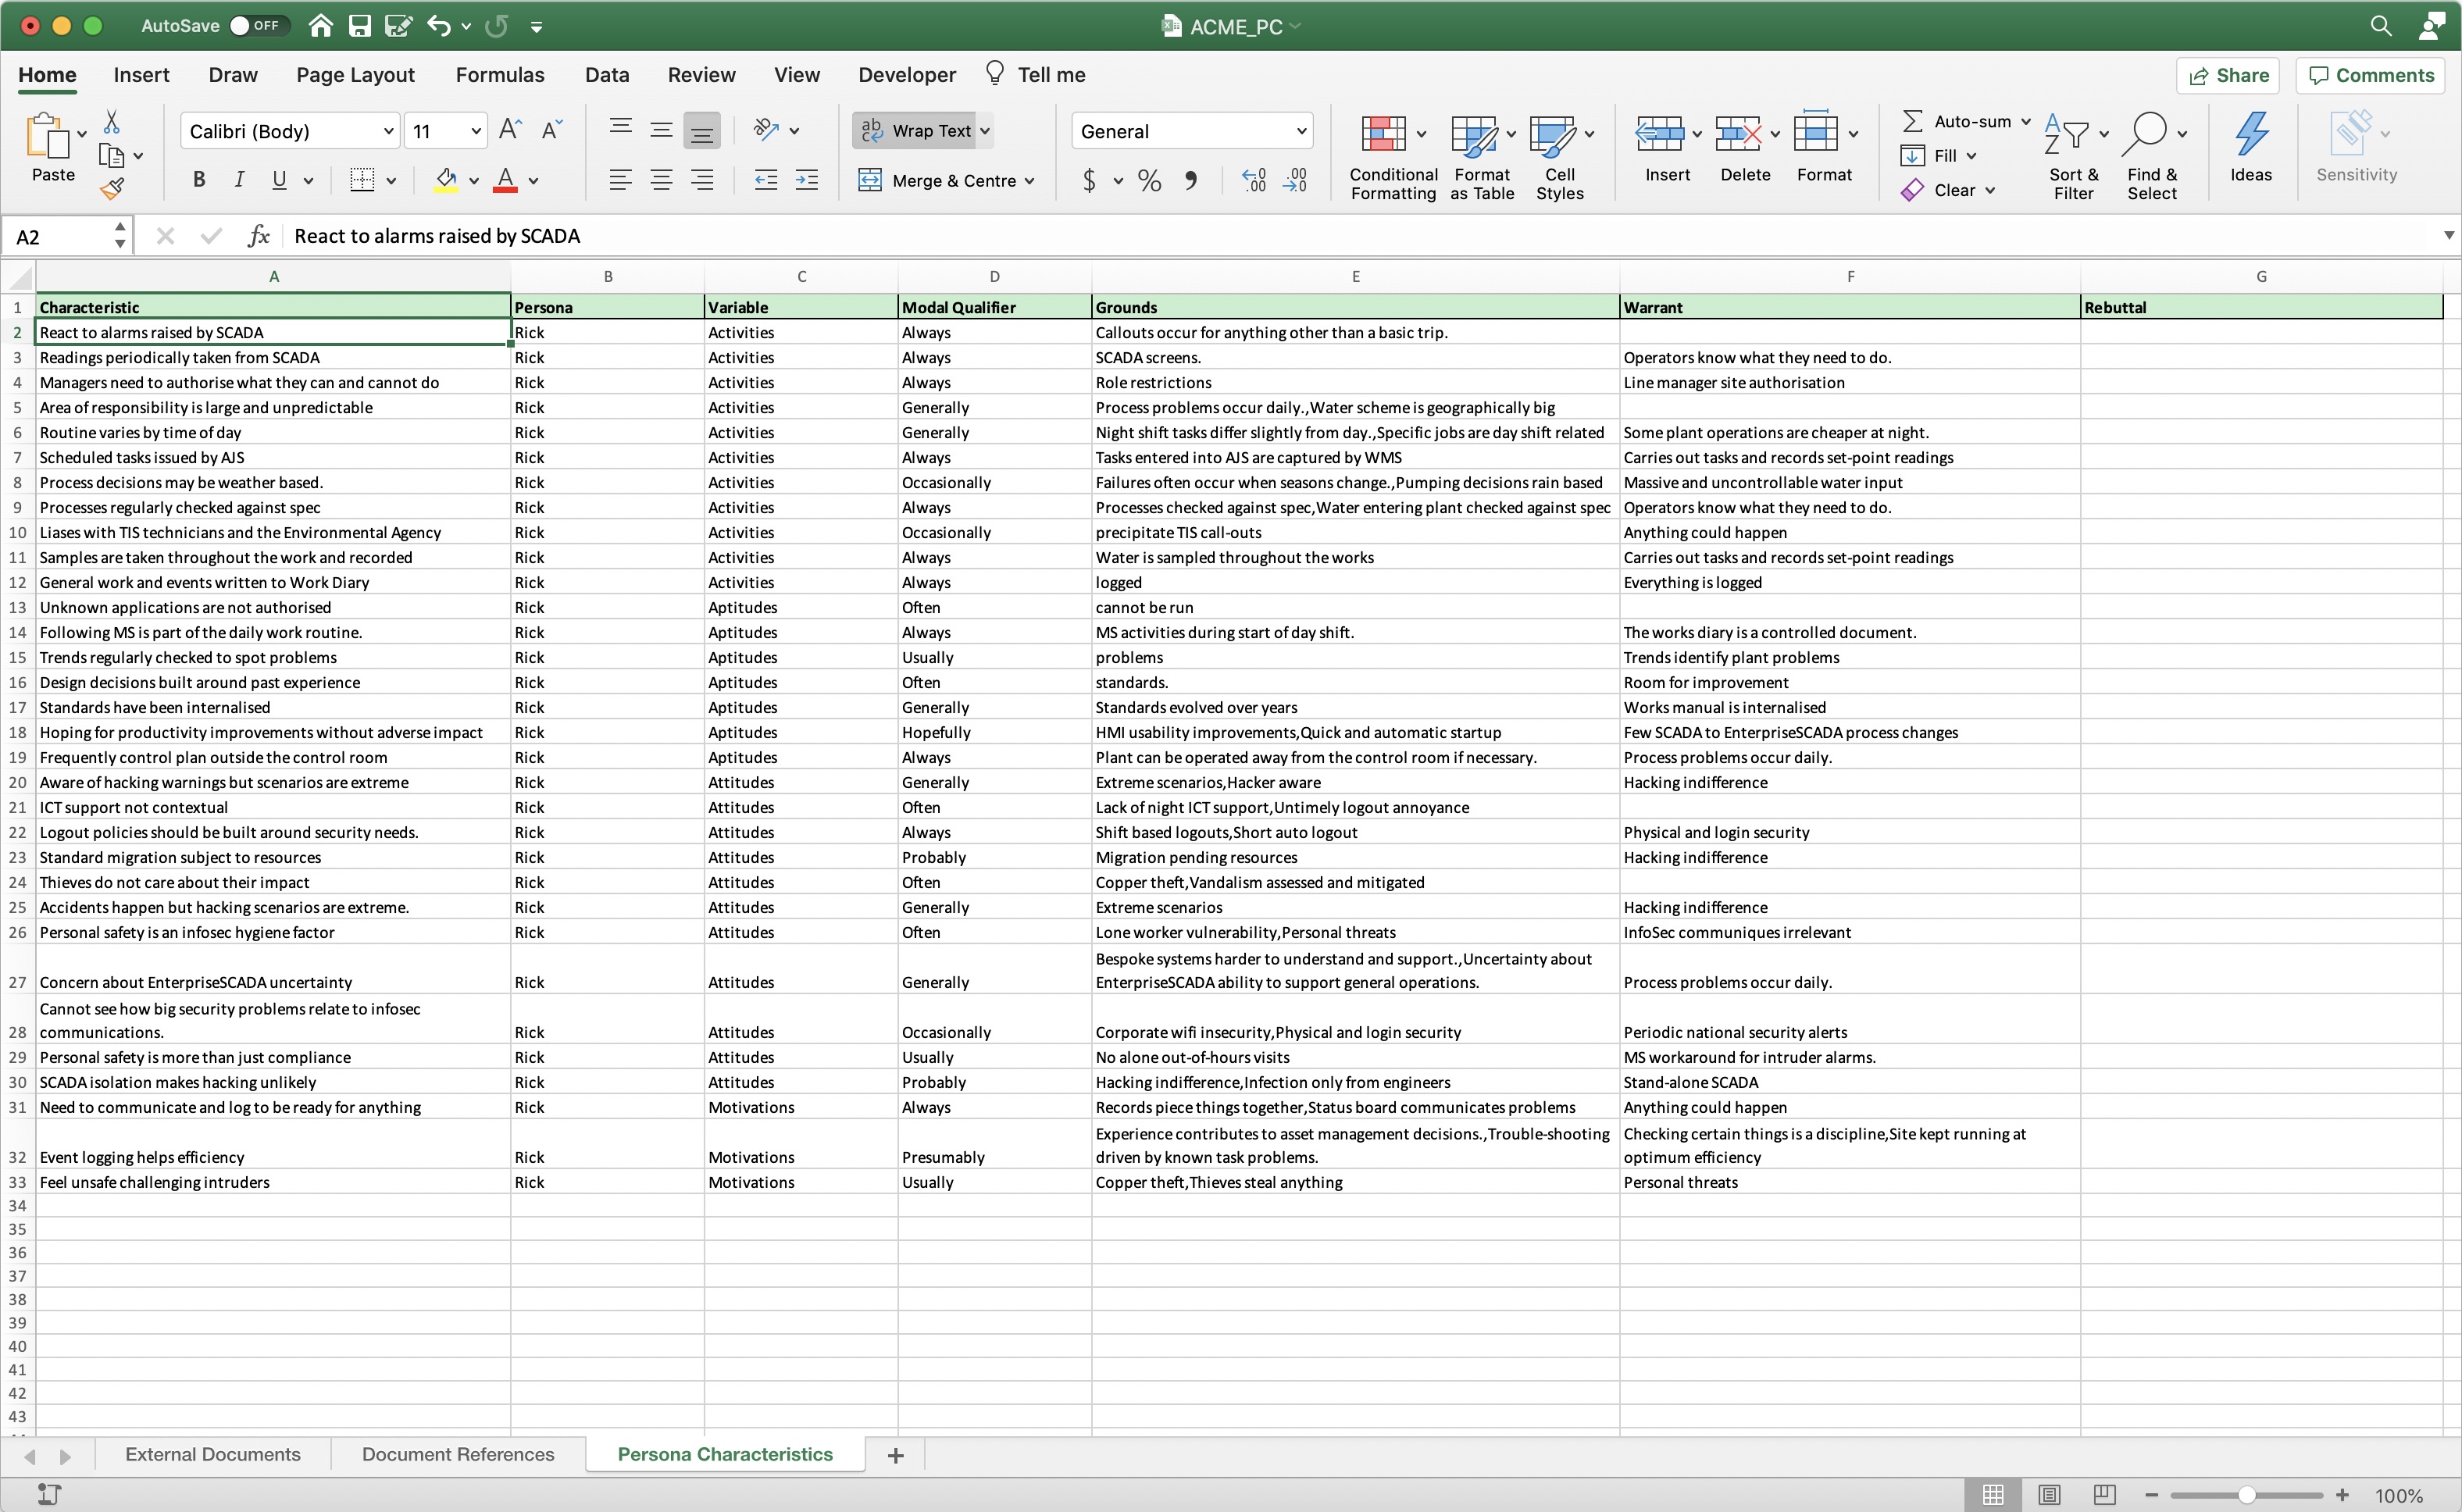 Persona characteristics spreadsheet